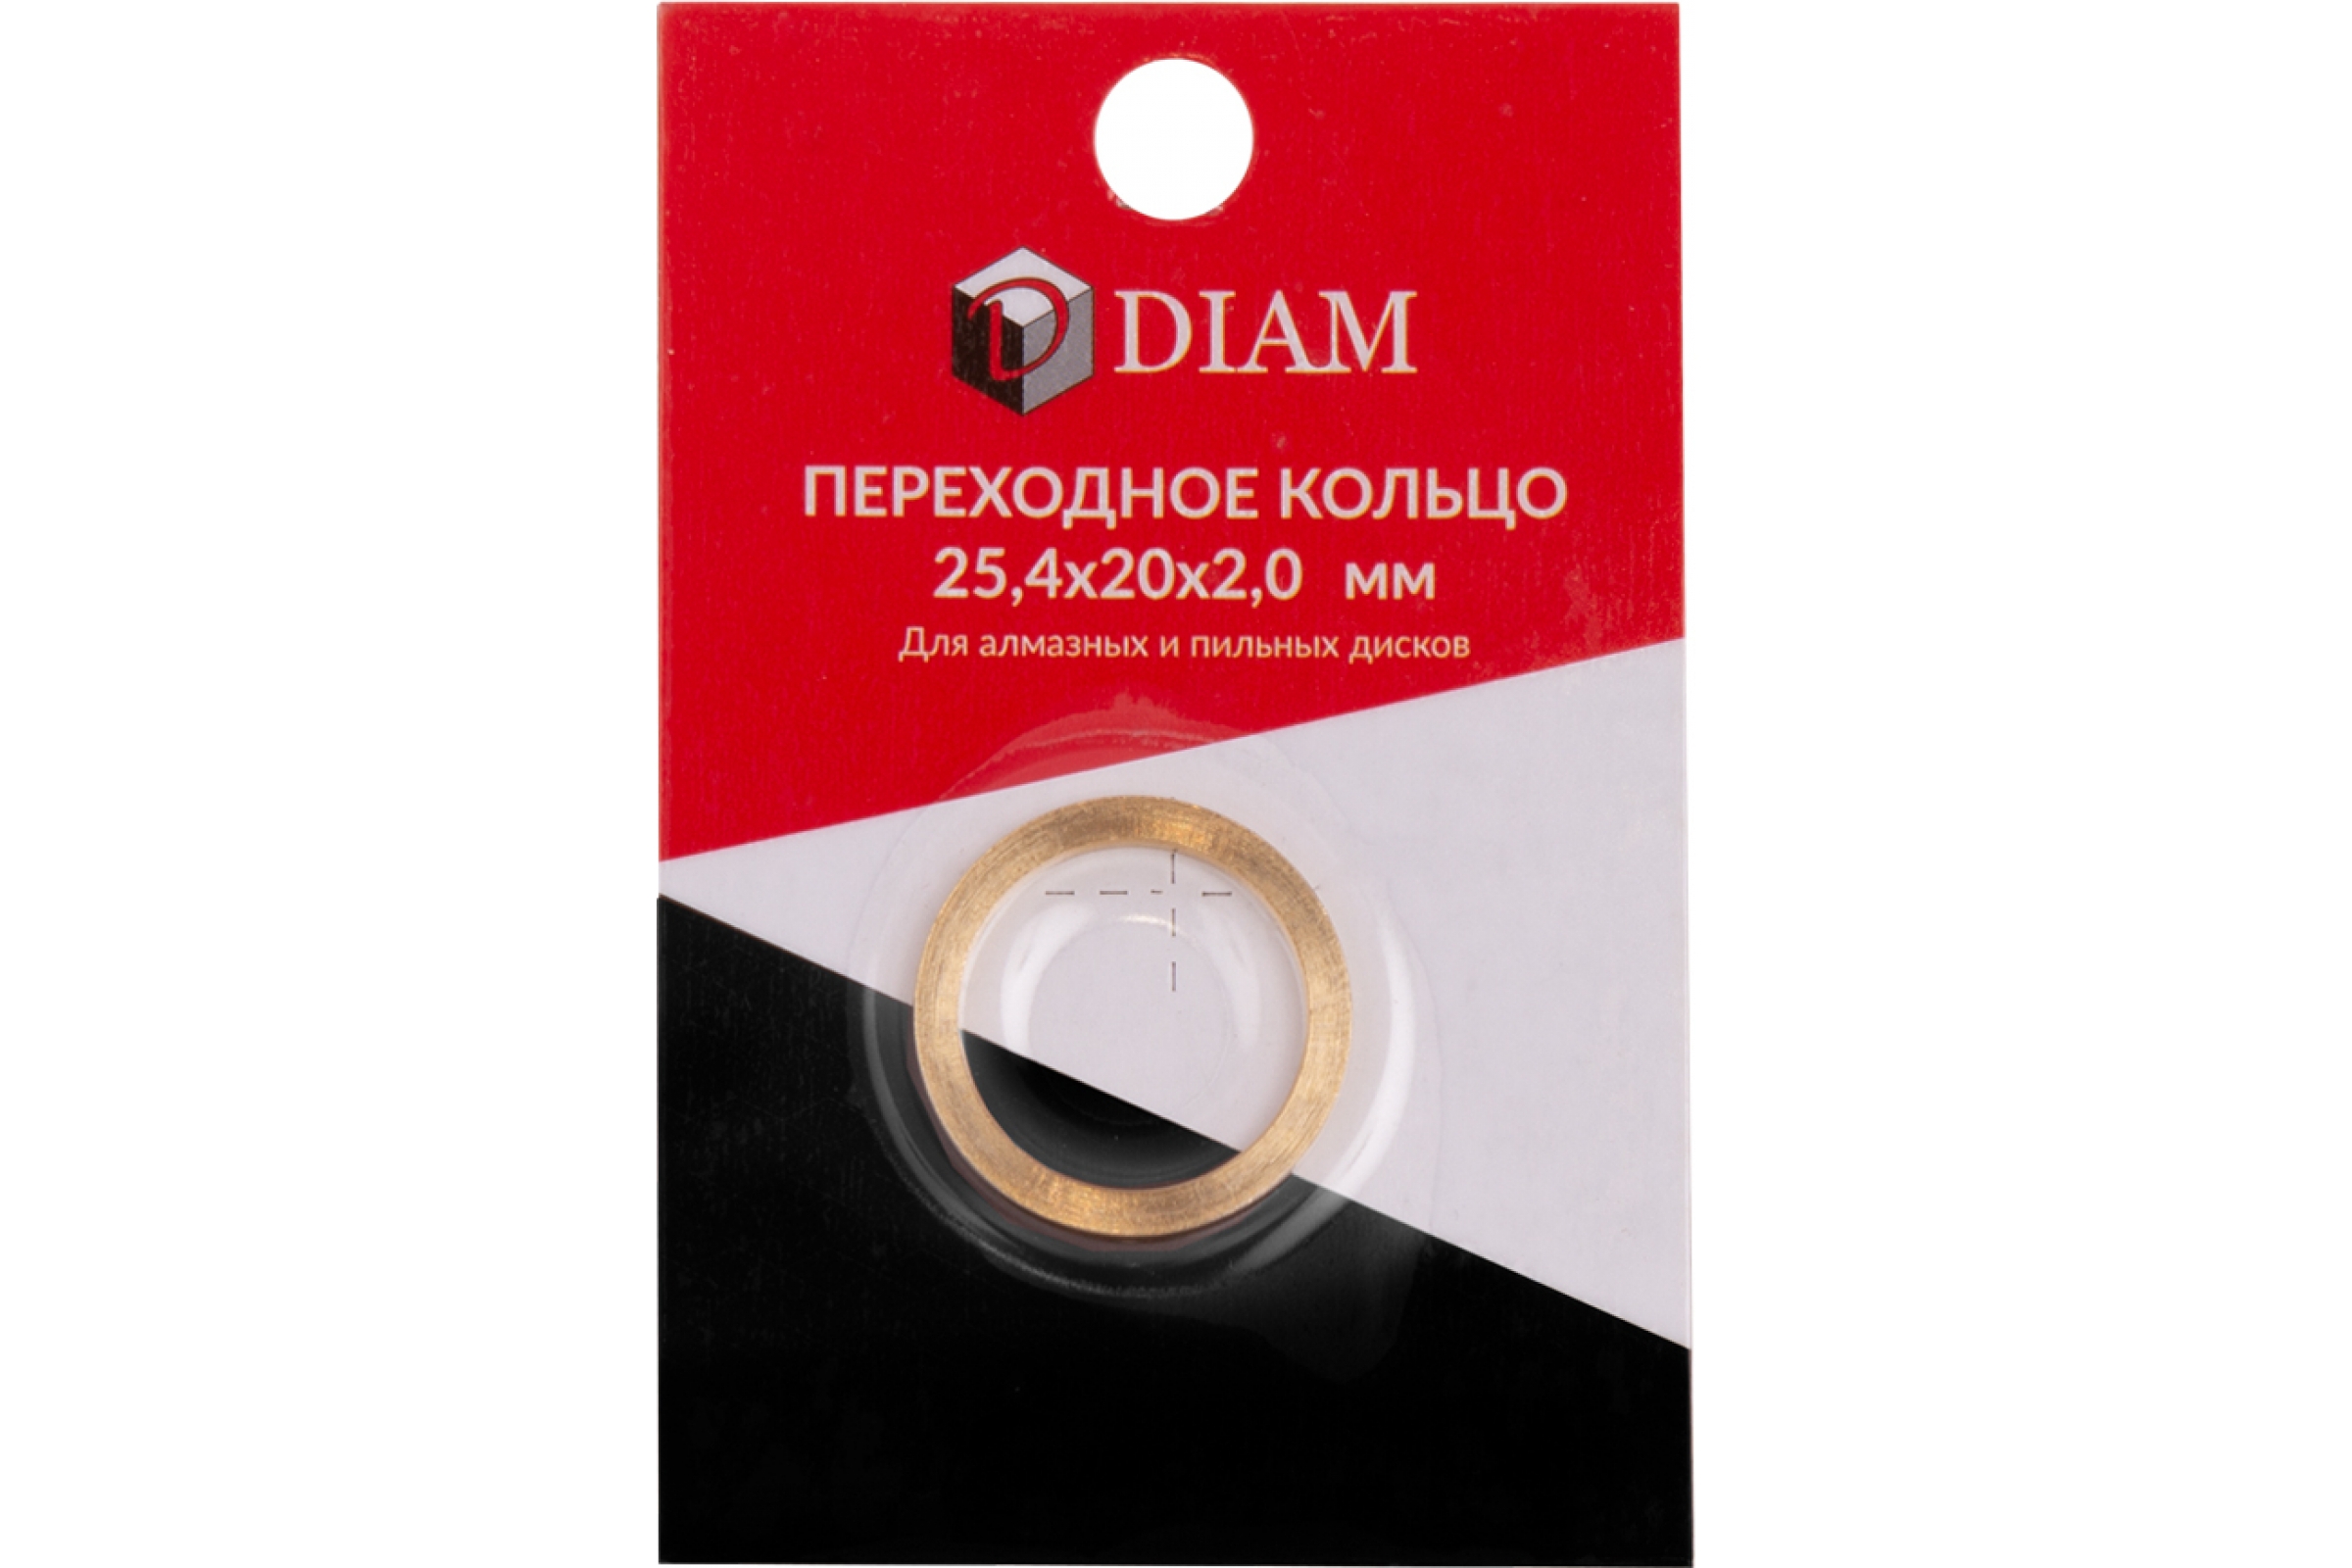 Кольцо переходное DIAM 25,4х20х2,0 (640083) (DIAM) diam переходное кольцо 22 2х20х1 2 640082